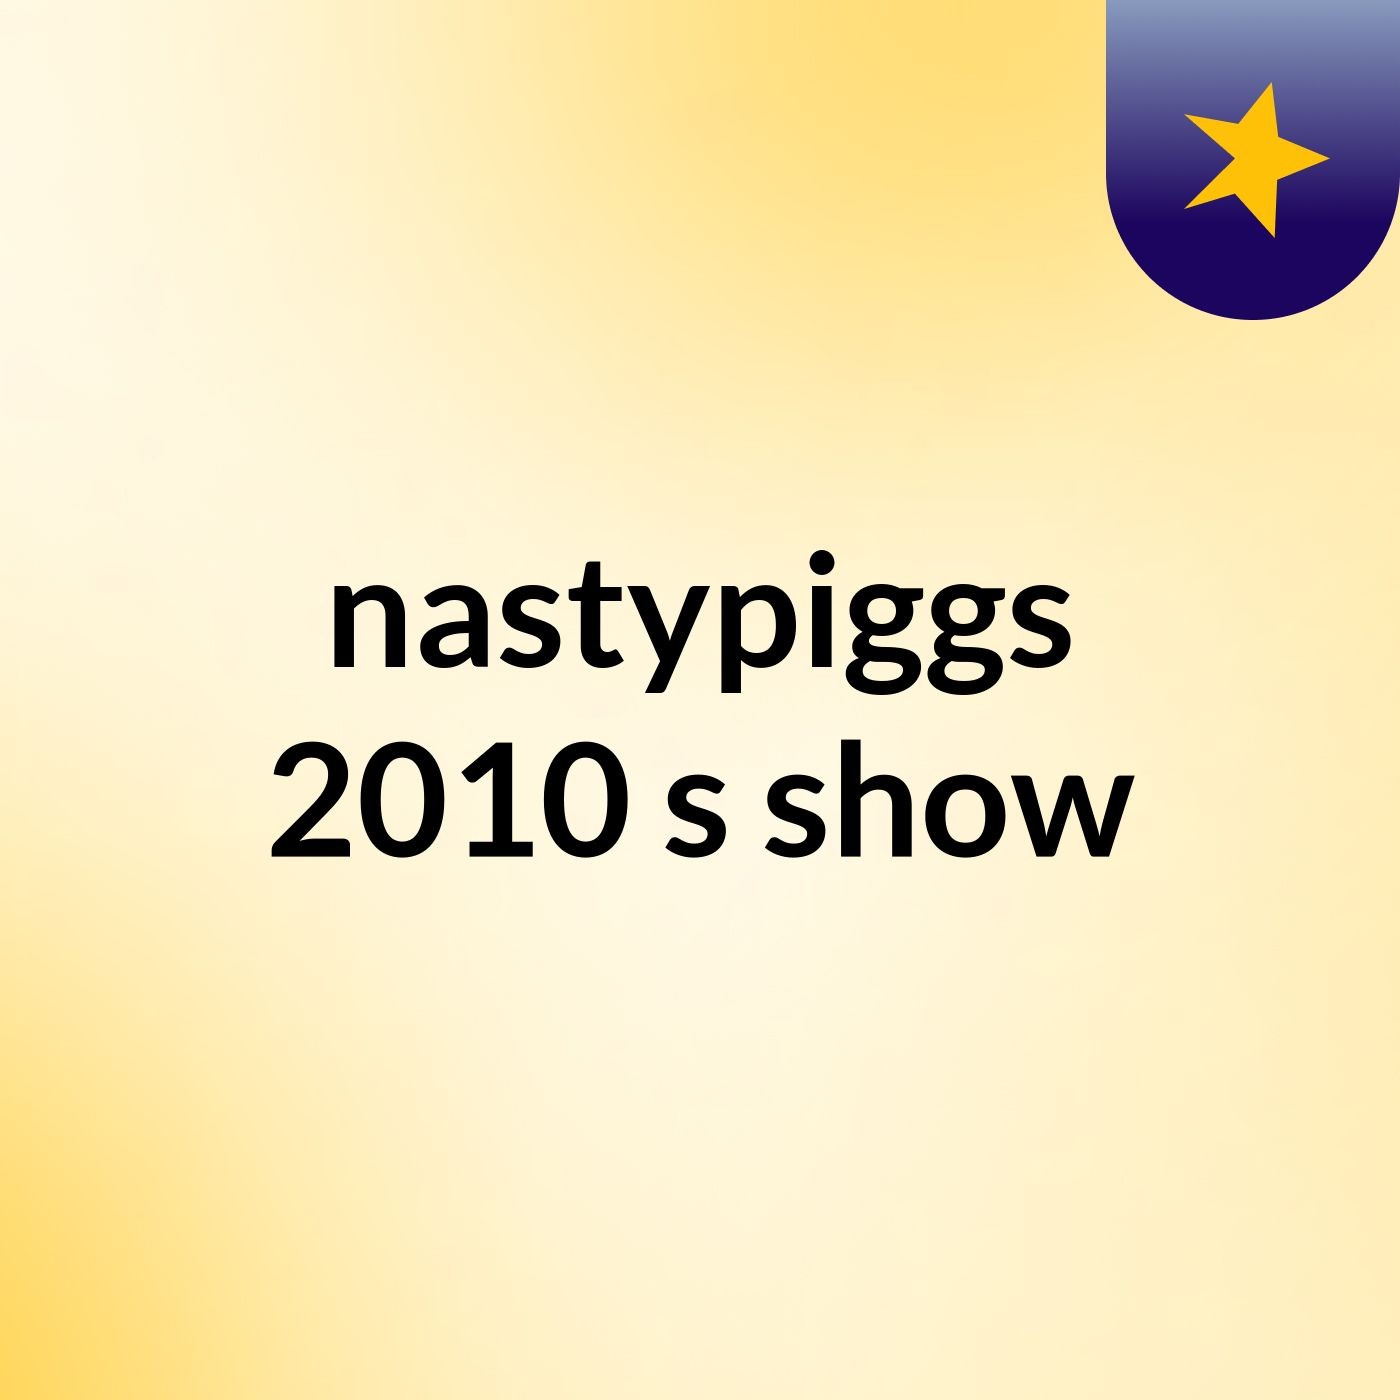 nastypiggs 2010's show